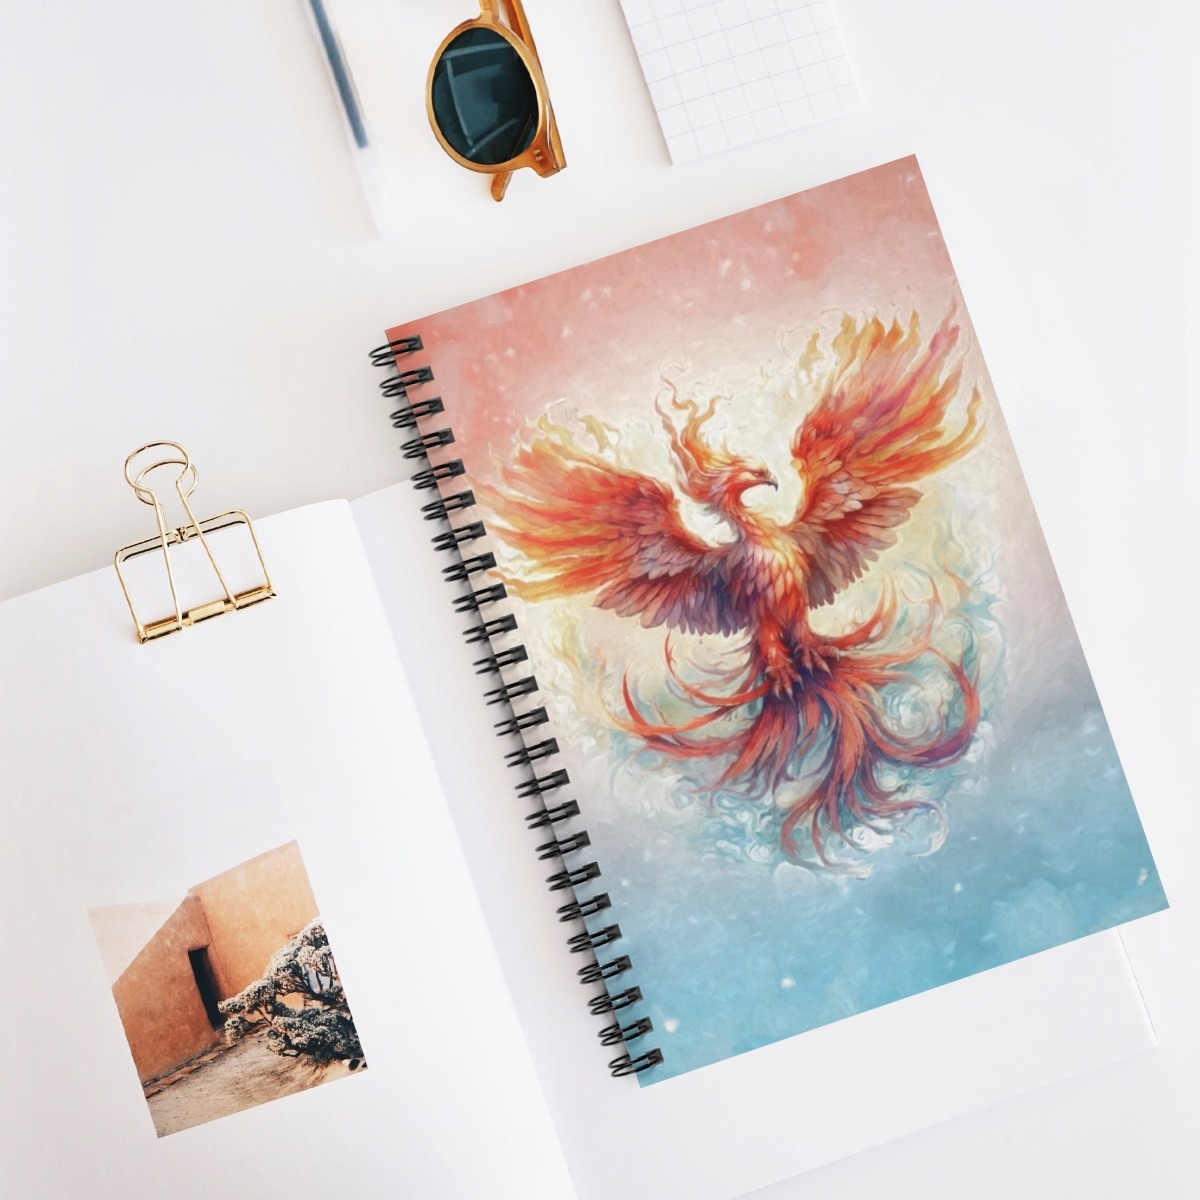 Phoenix Spiral Notebook